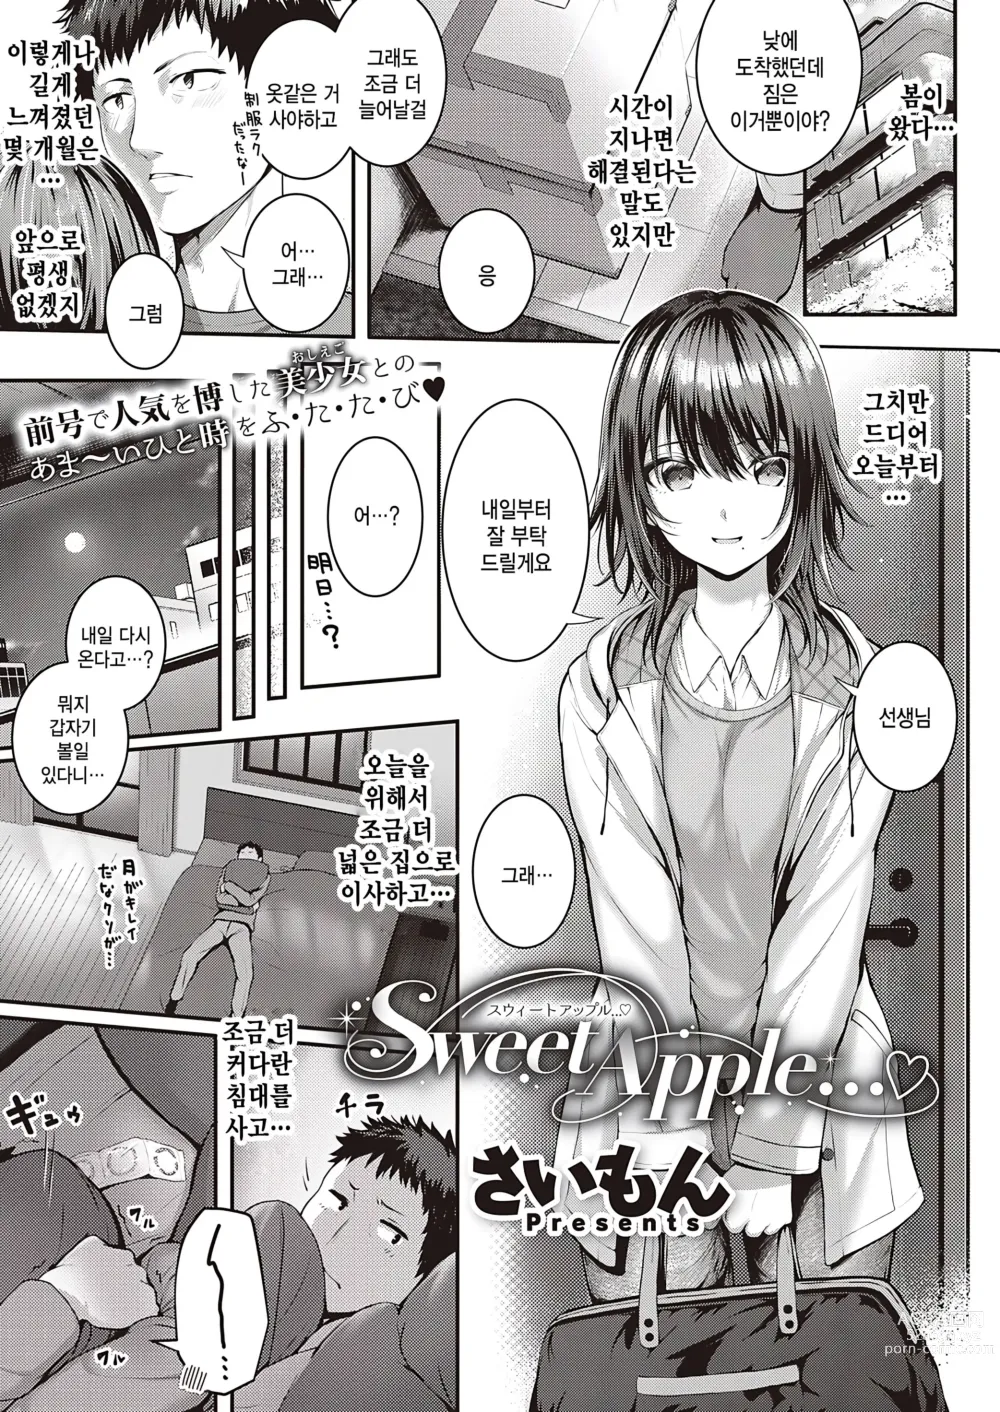 Page 1 of manga Sweet Apple...